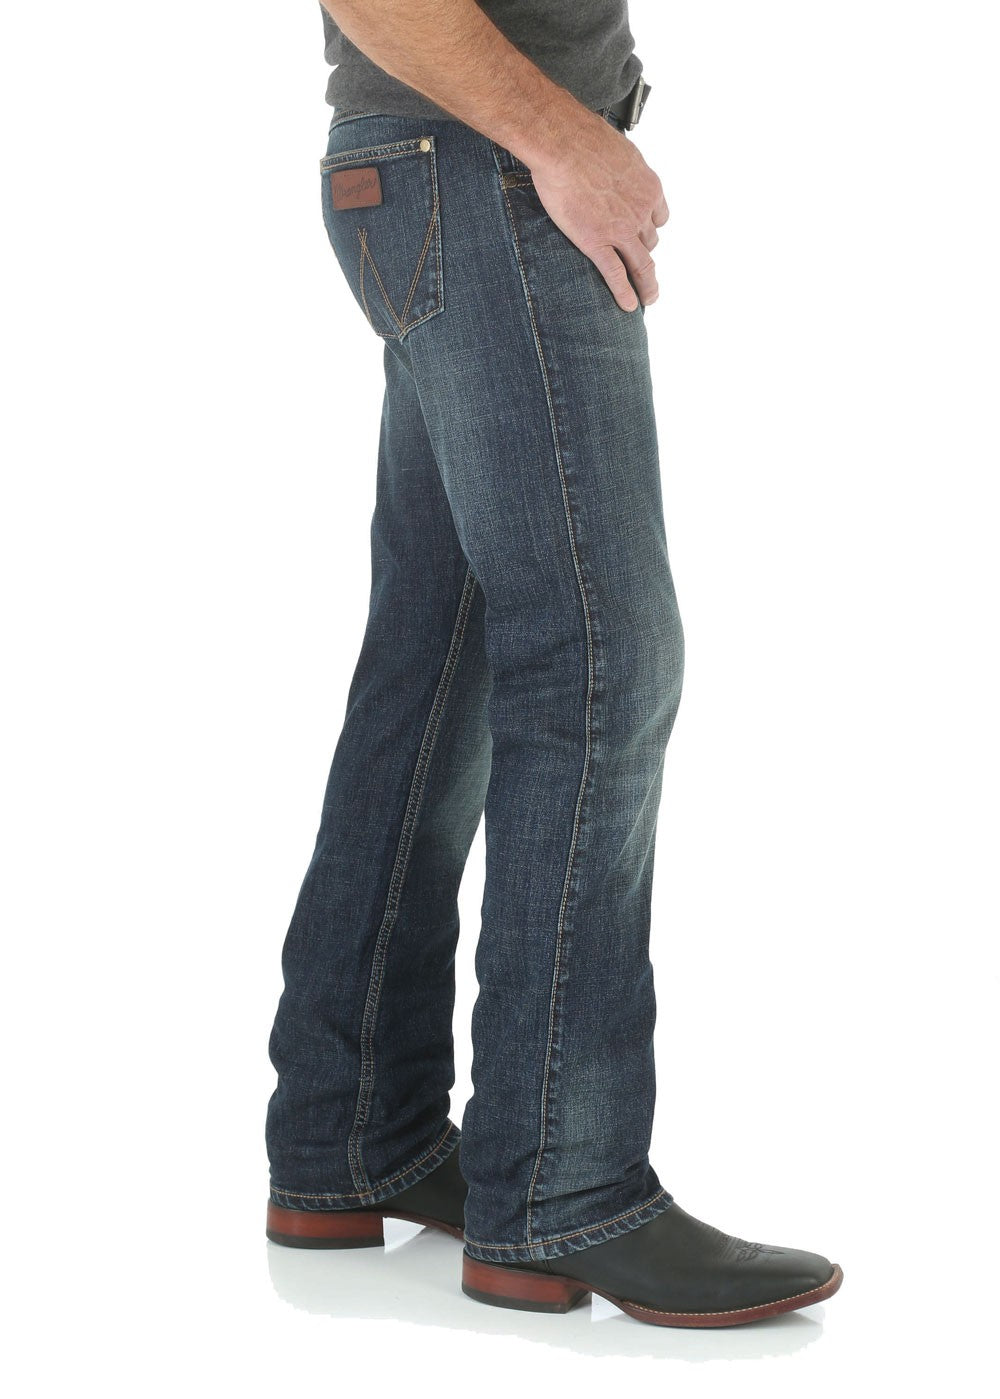 Wrangler Retro Slim Straight Jean 34 Leg